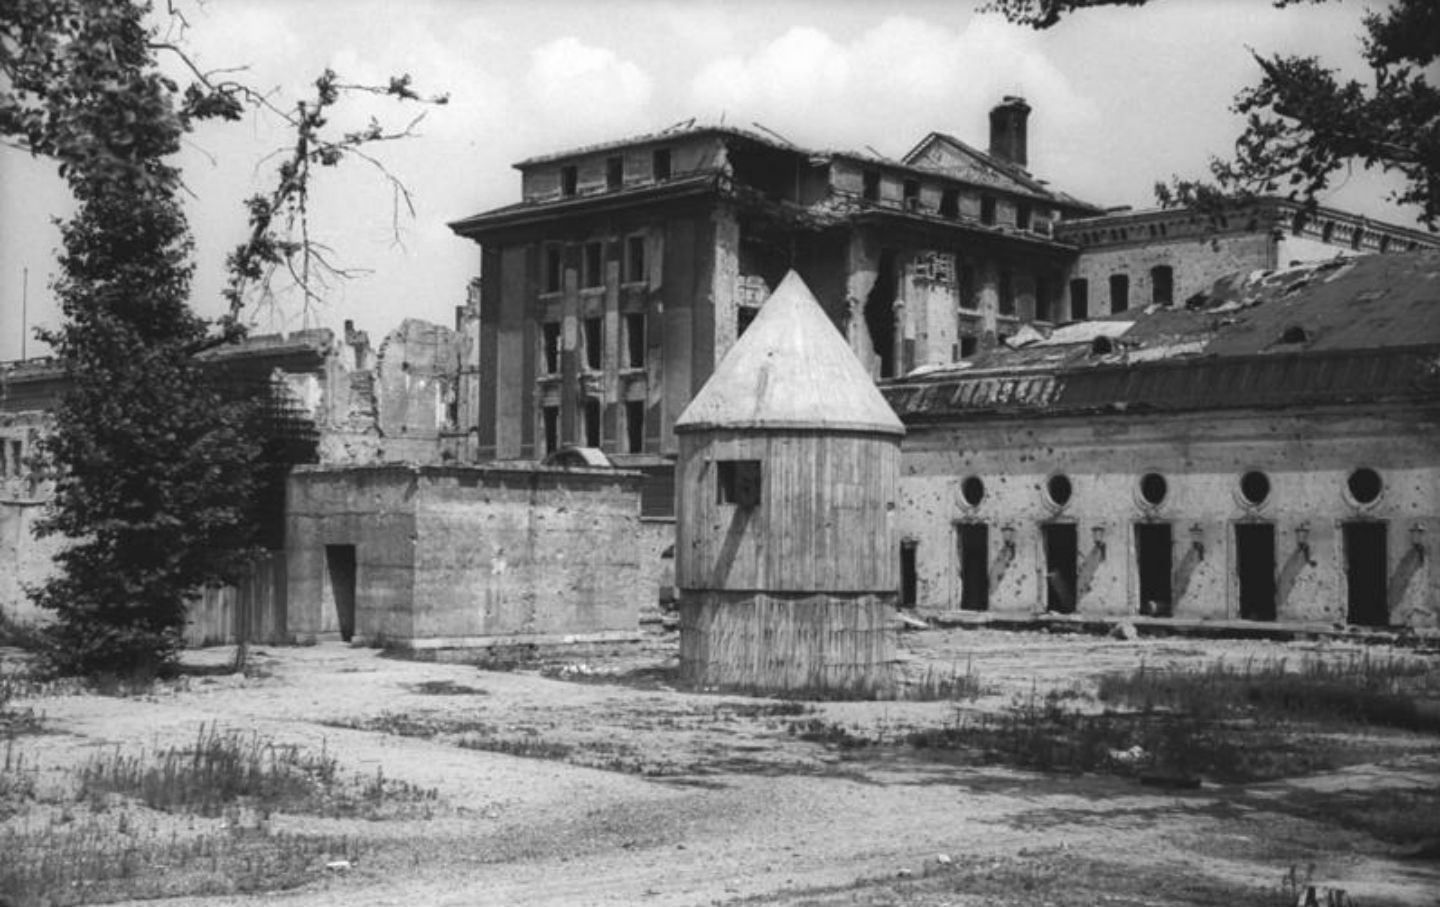 April 30, 1945: Adolf Hitler Commits Suicide in a Berlin Bunker